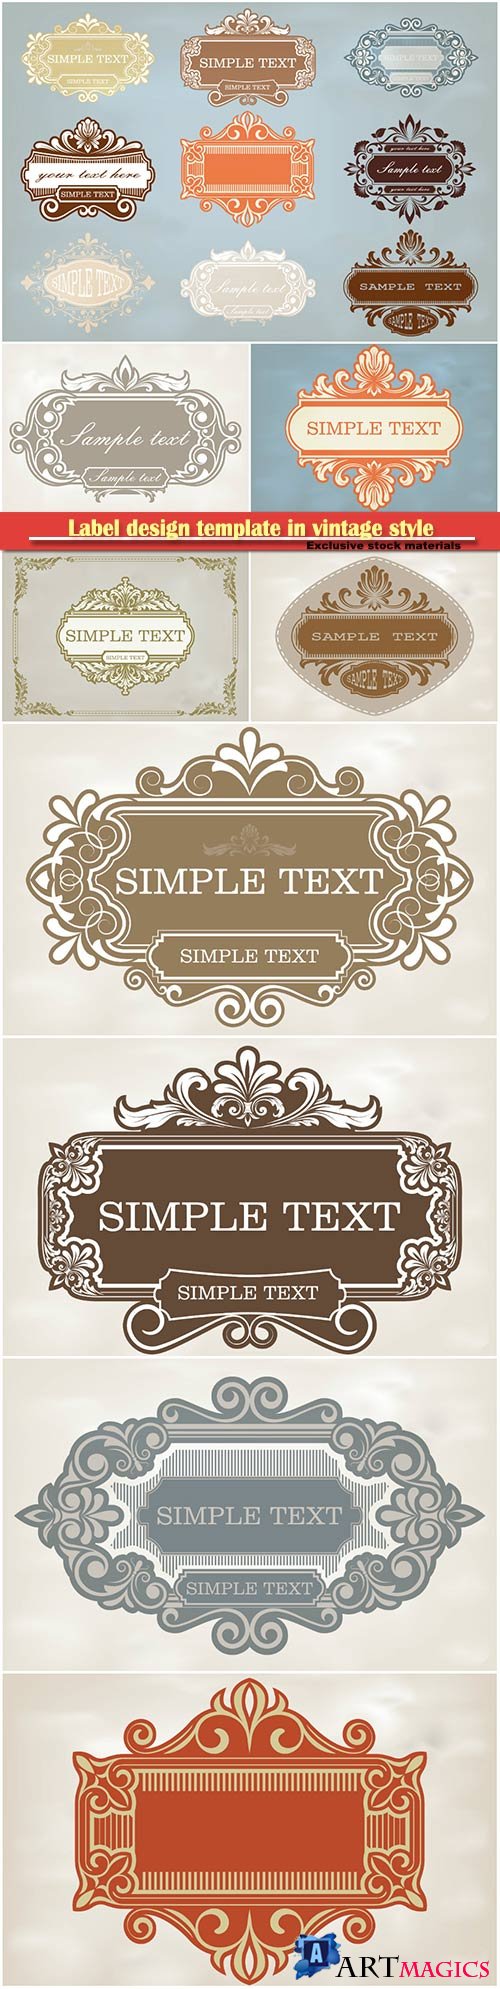 Label design template in vintage style, decorative frame, ornament vector